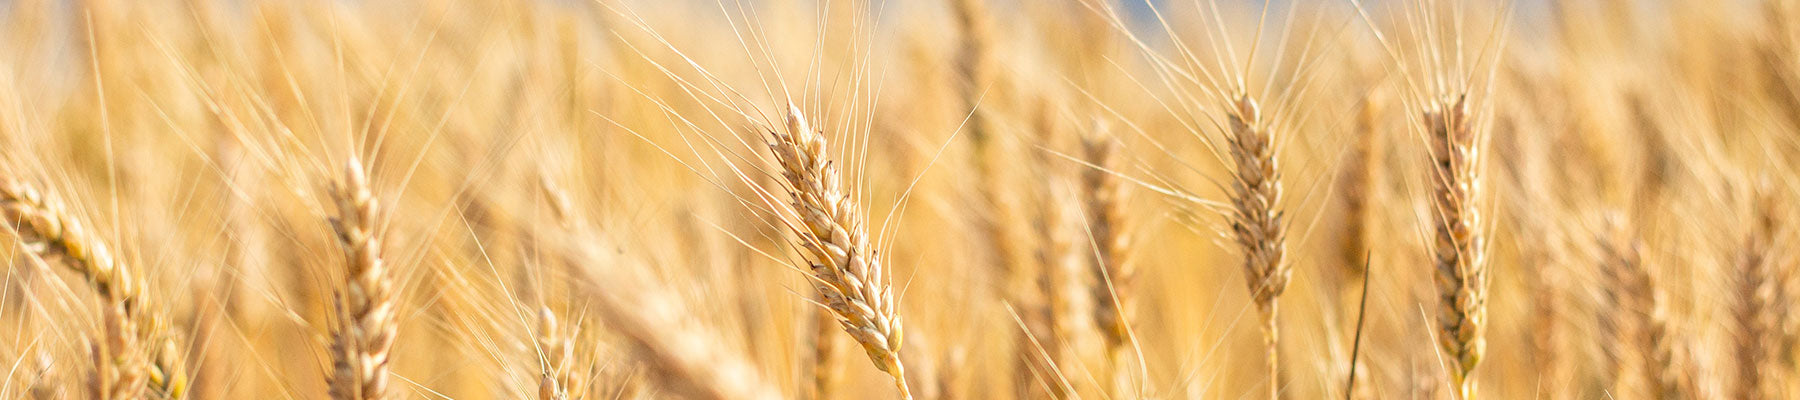 montana wheat field